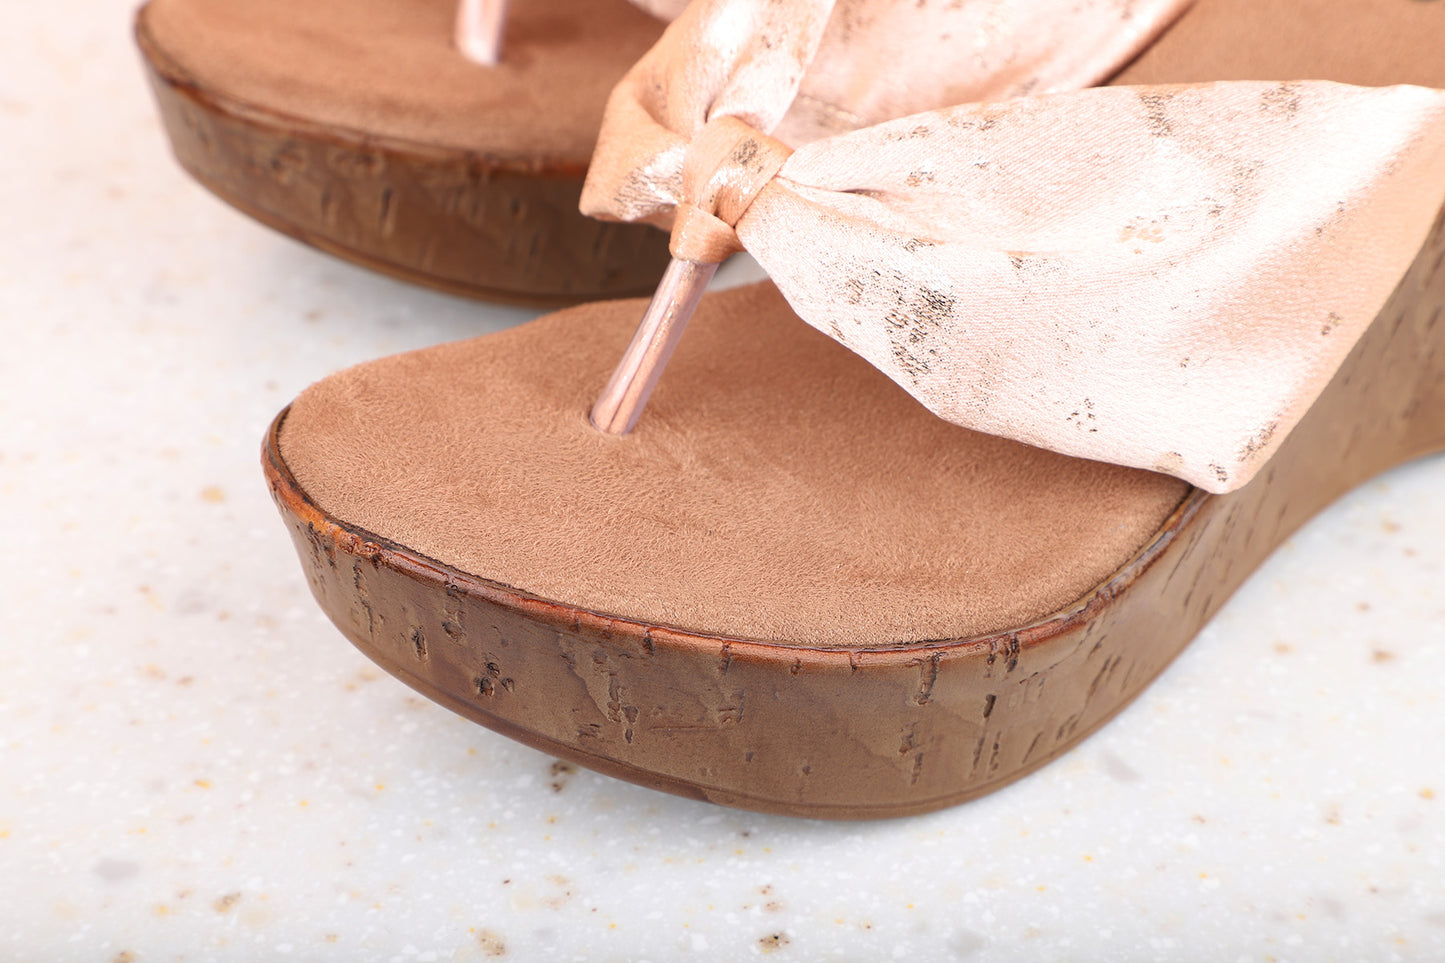 Women Rose gold Textured Wedge Sandals